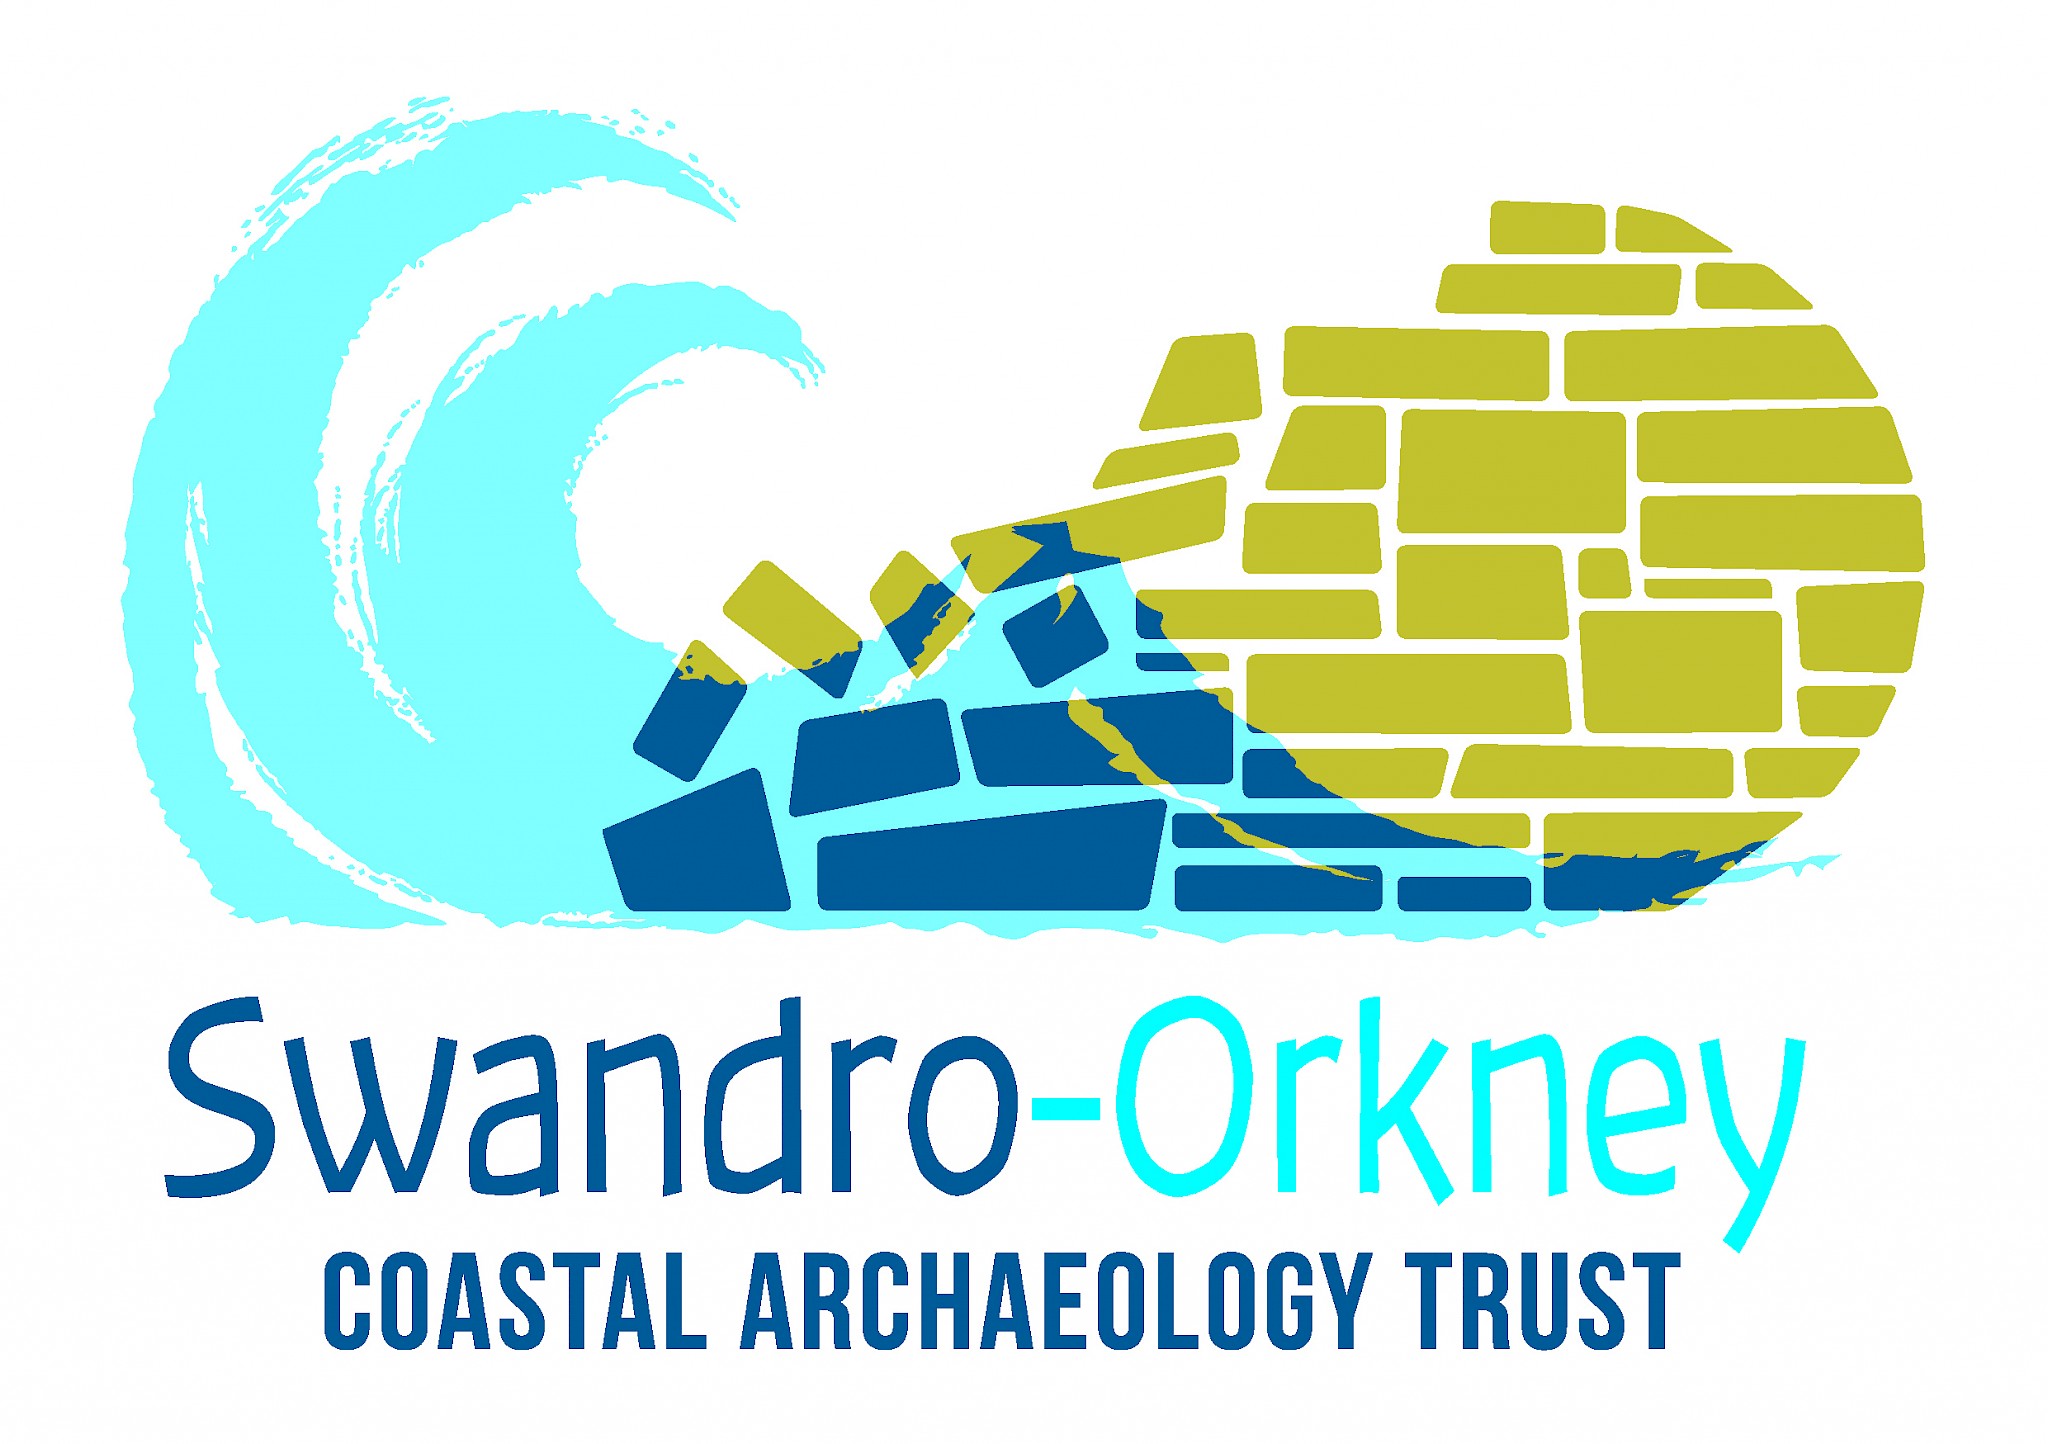 Swandro-Orkney Coastal Archaeology Trust Logo